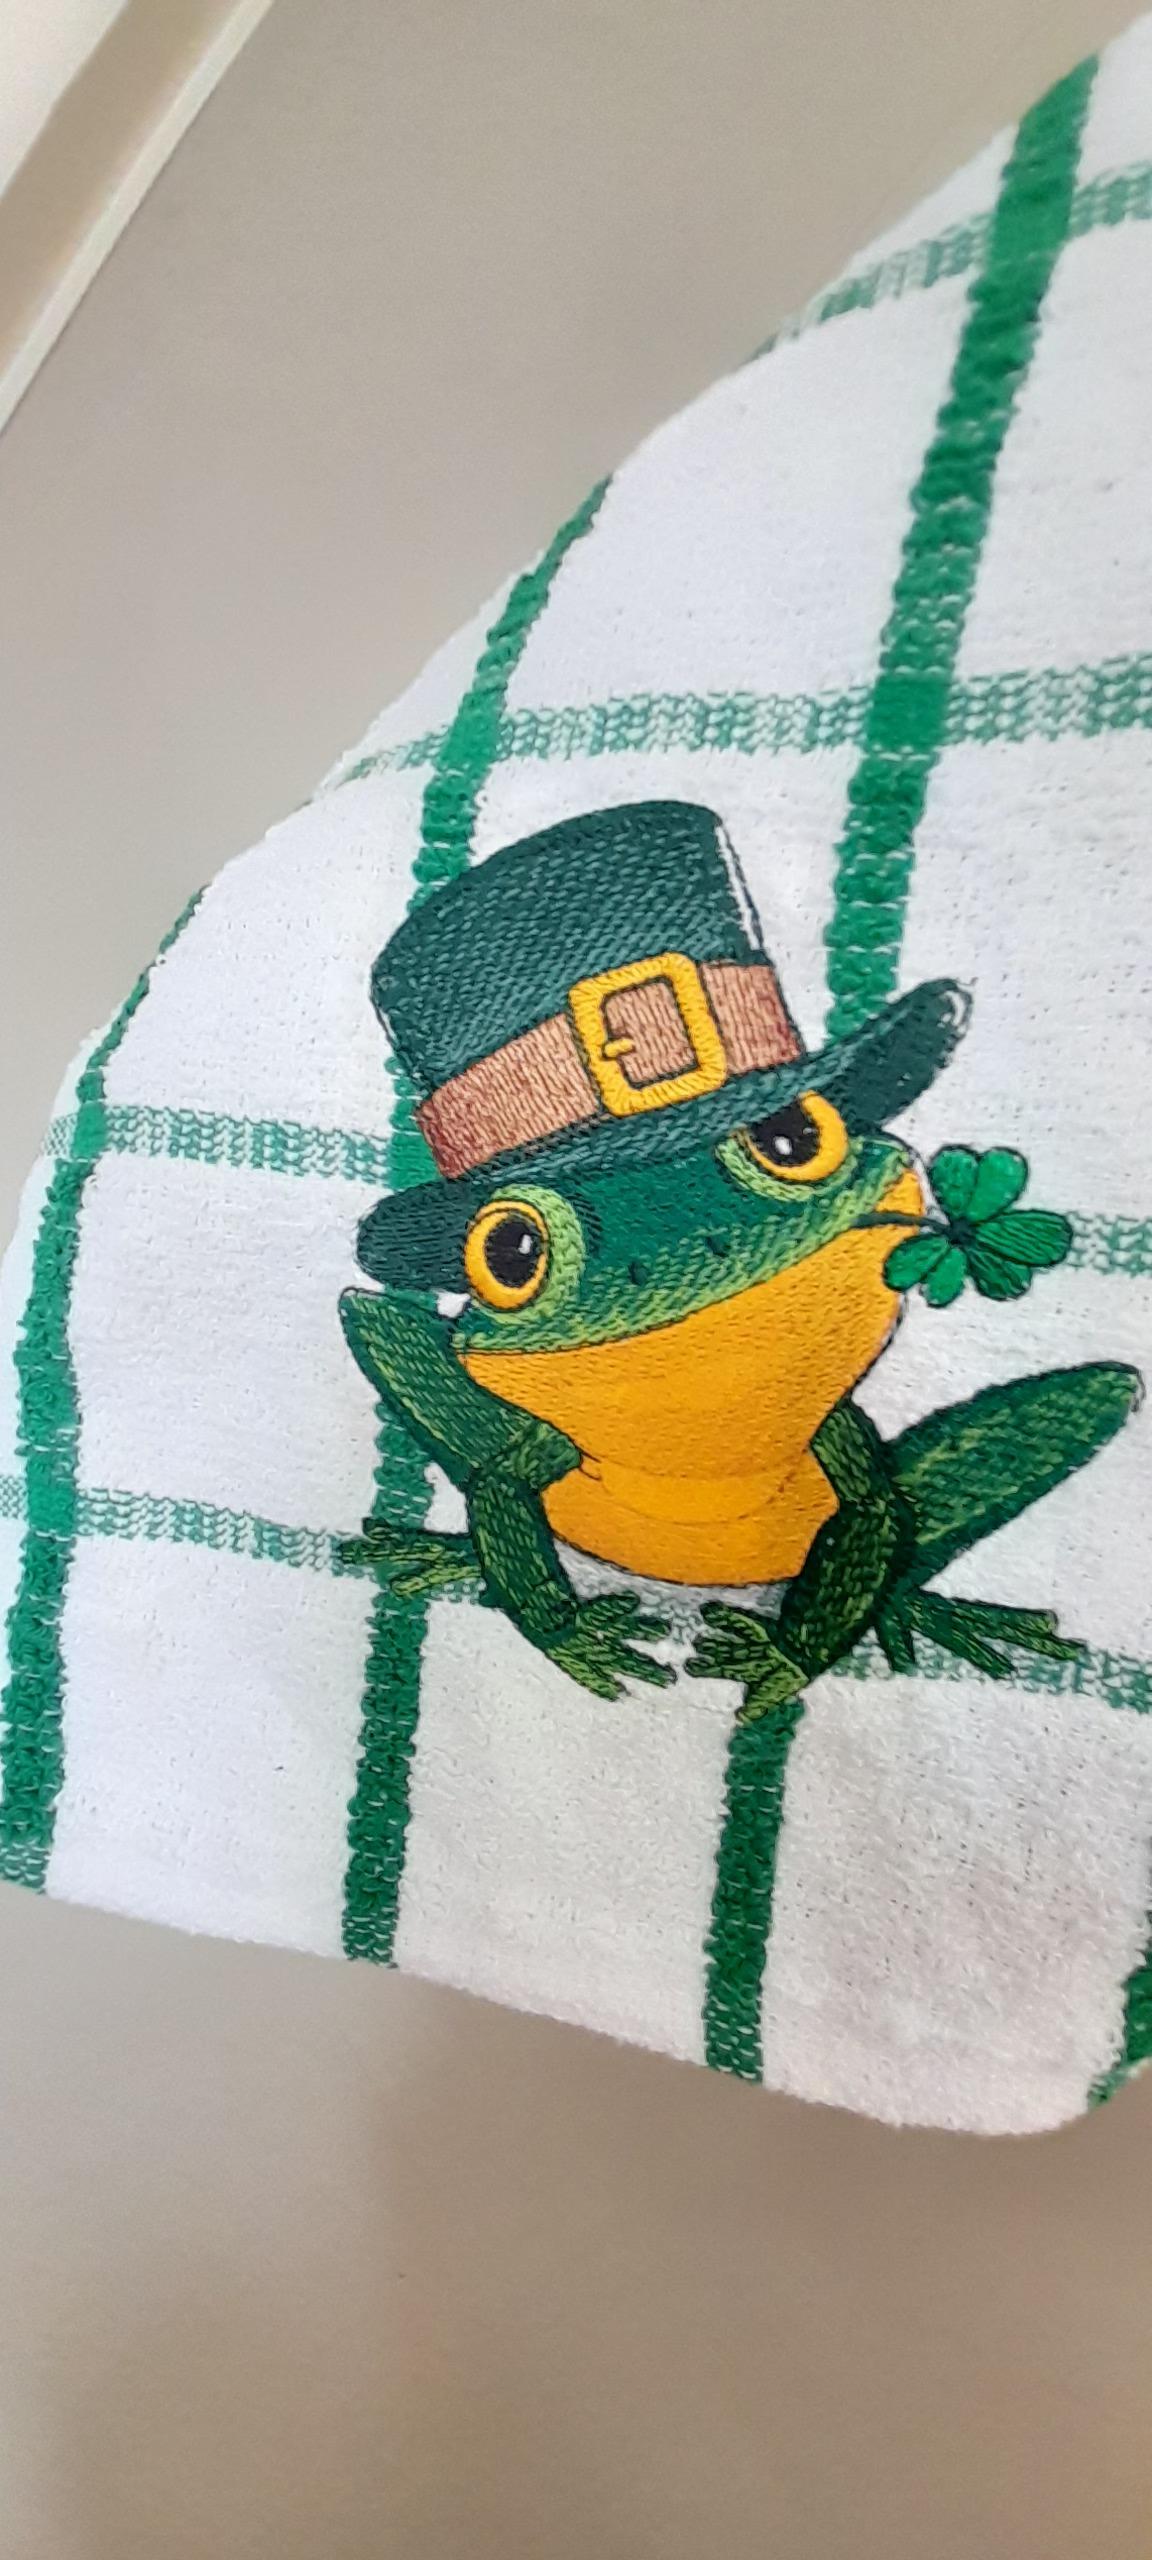 Embroidered irish frog design on towel